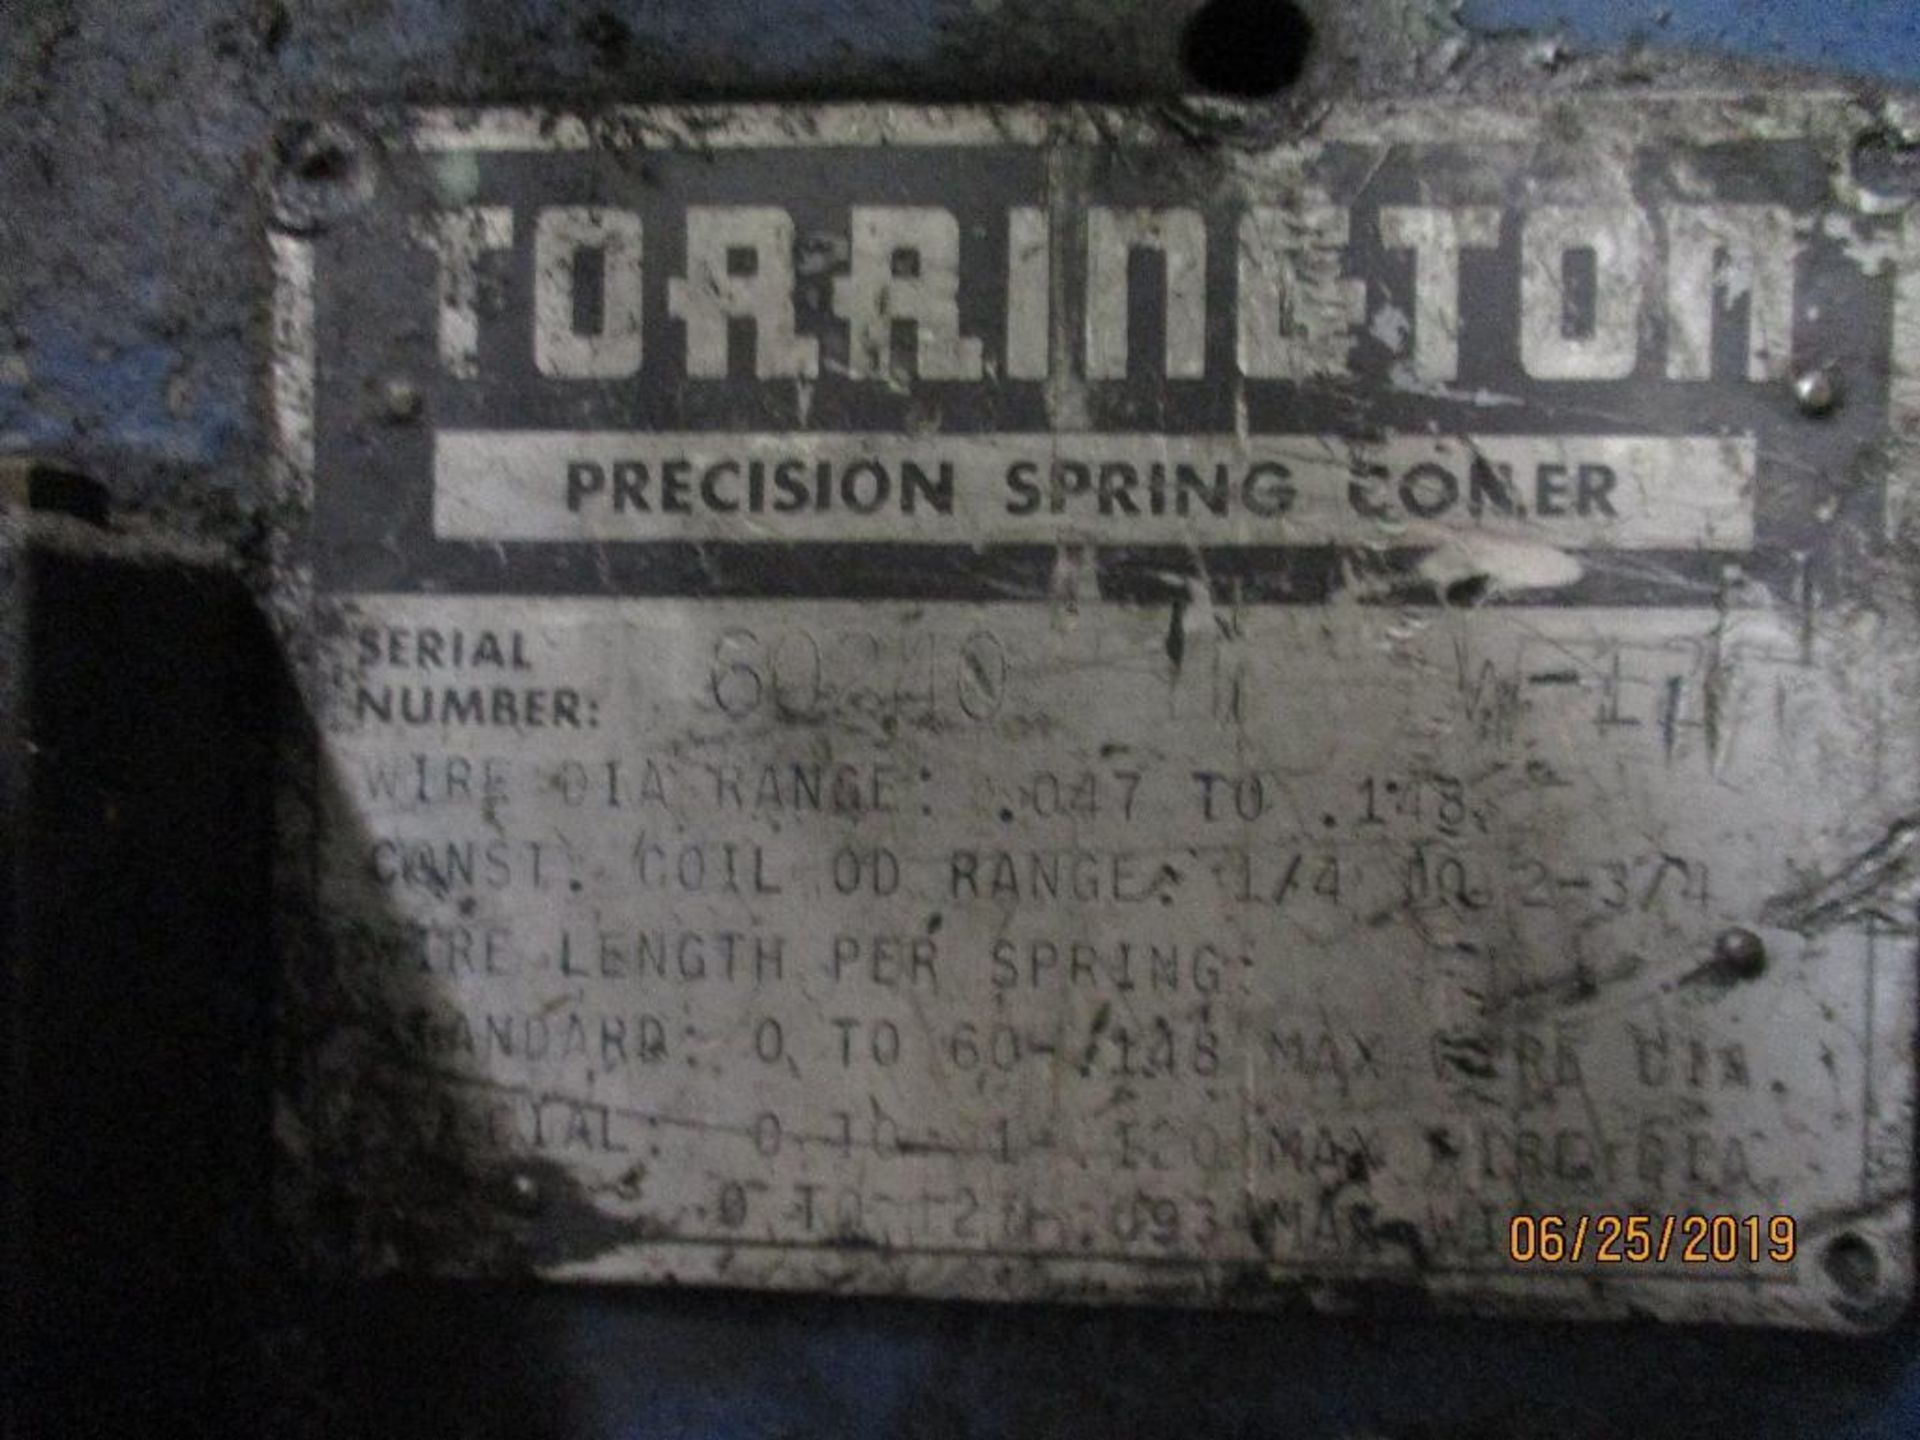 Torrington Precision Spring Coiler S/N 60240 W-12, Wire Dia. Range .047" to .148", Coil OD Range 1/4 - Image 5 of 9